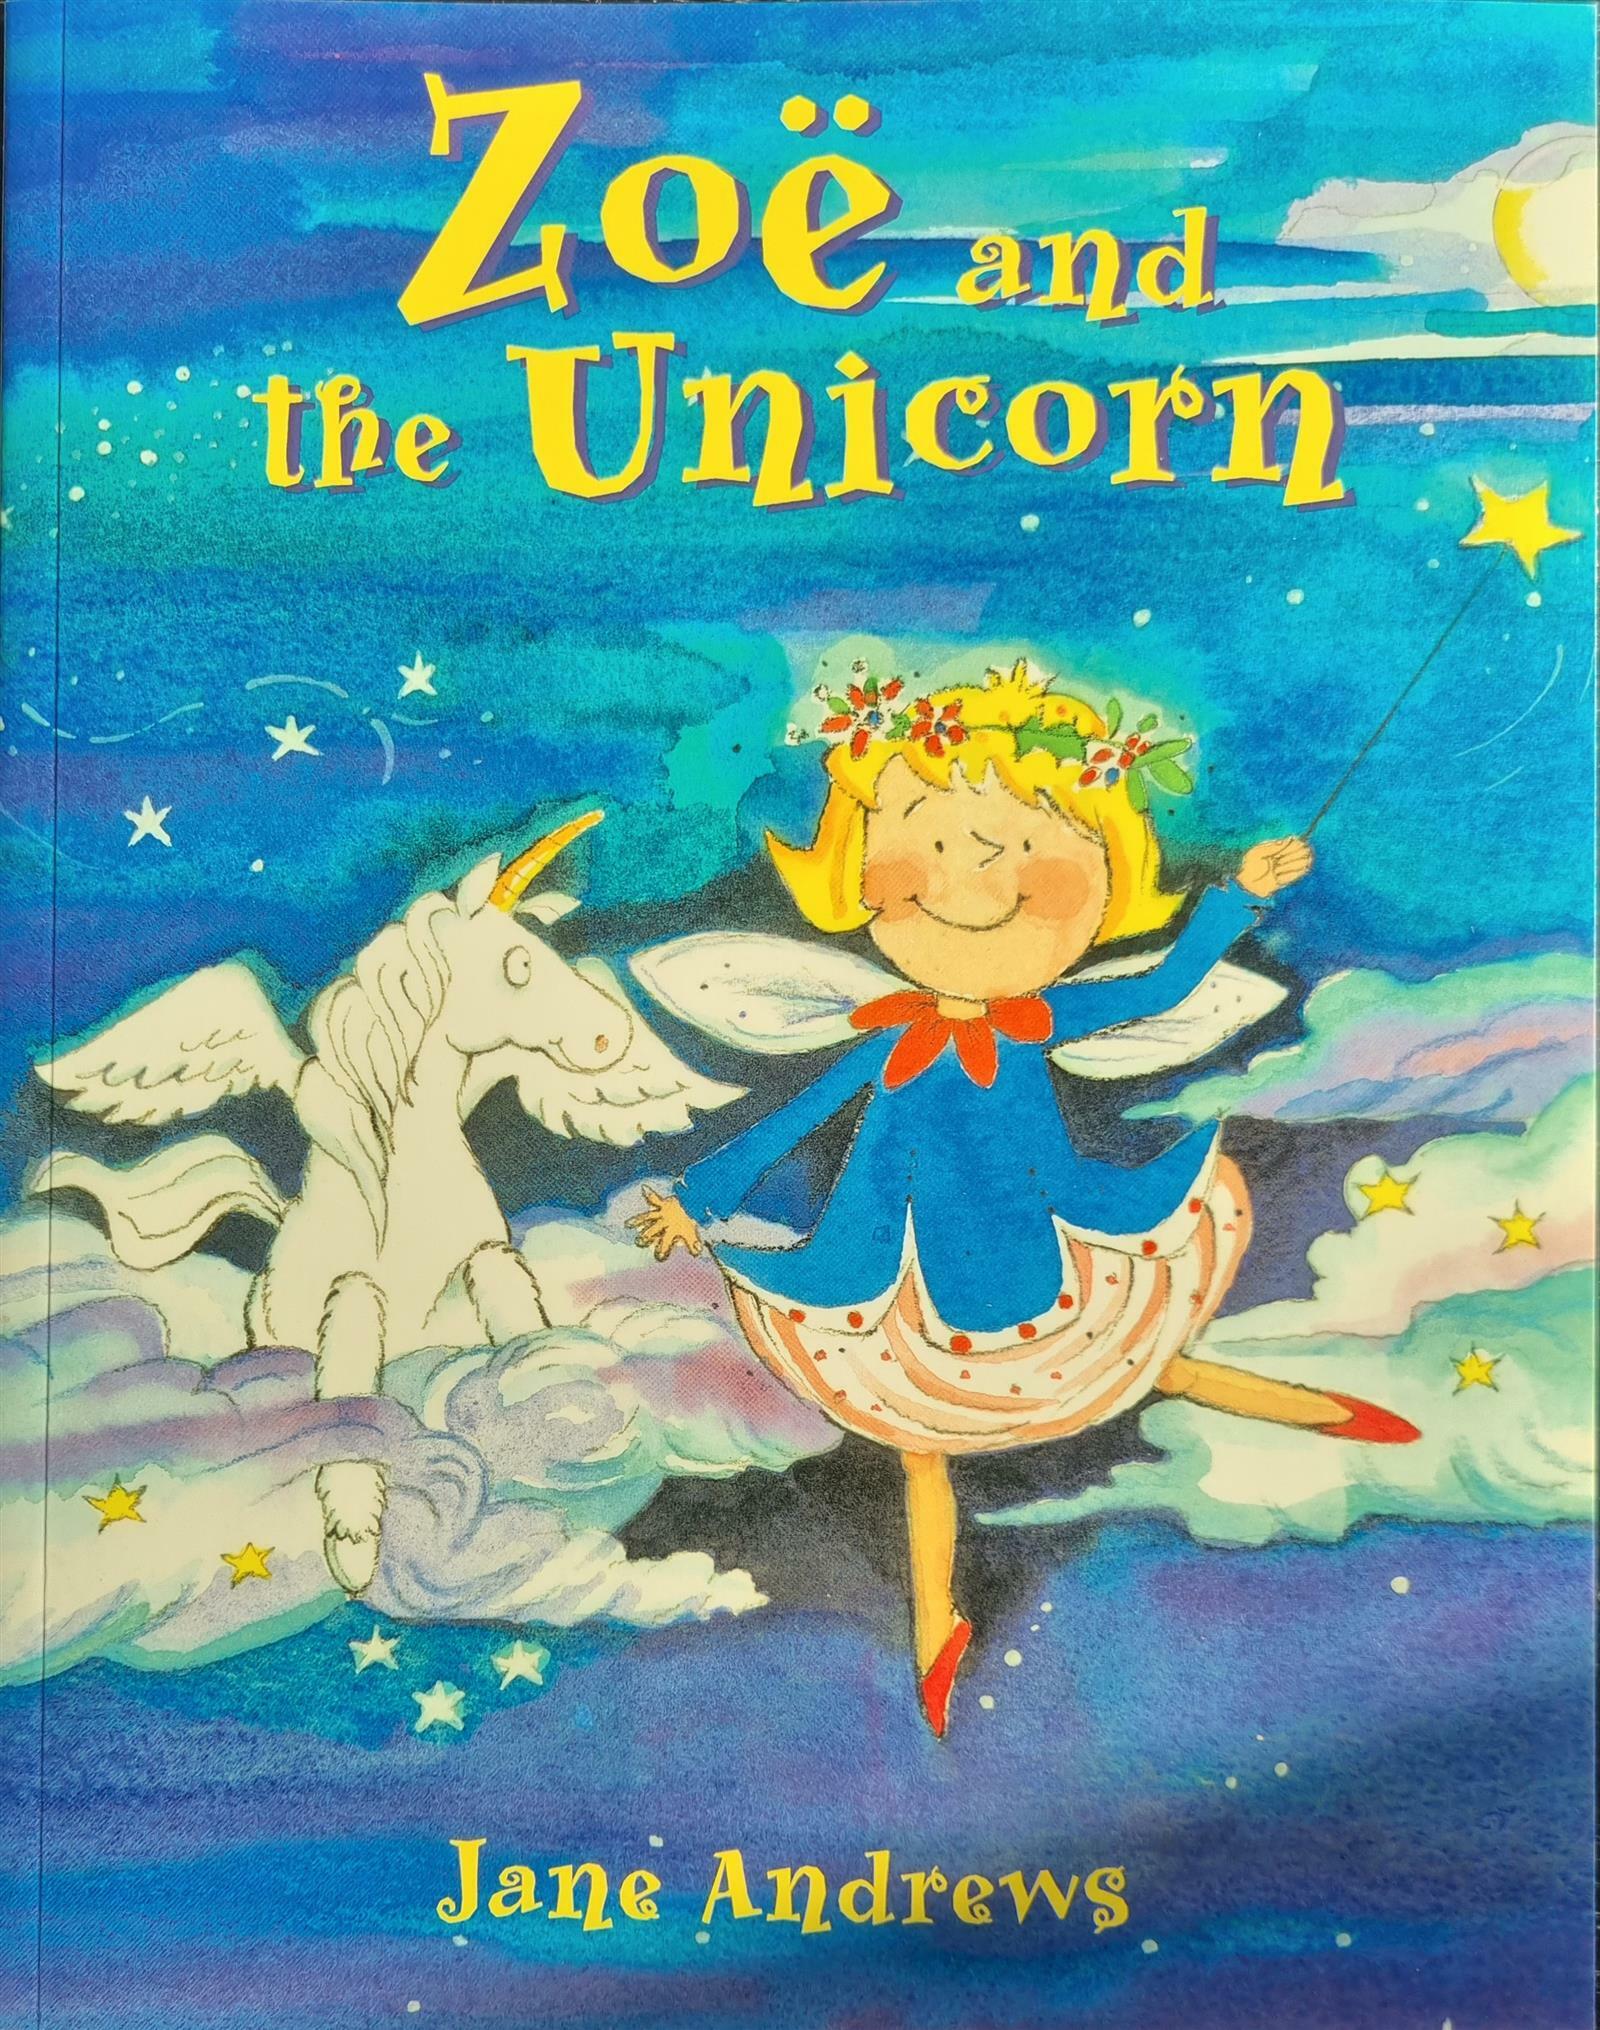 Zoe and the unicorn